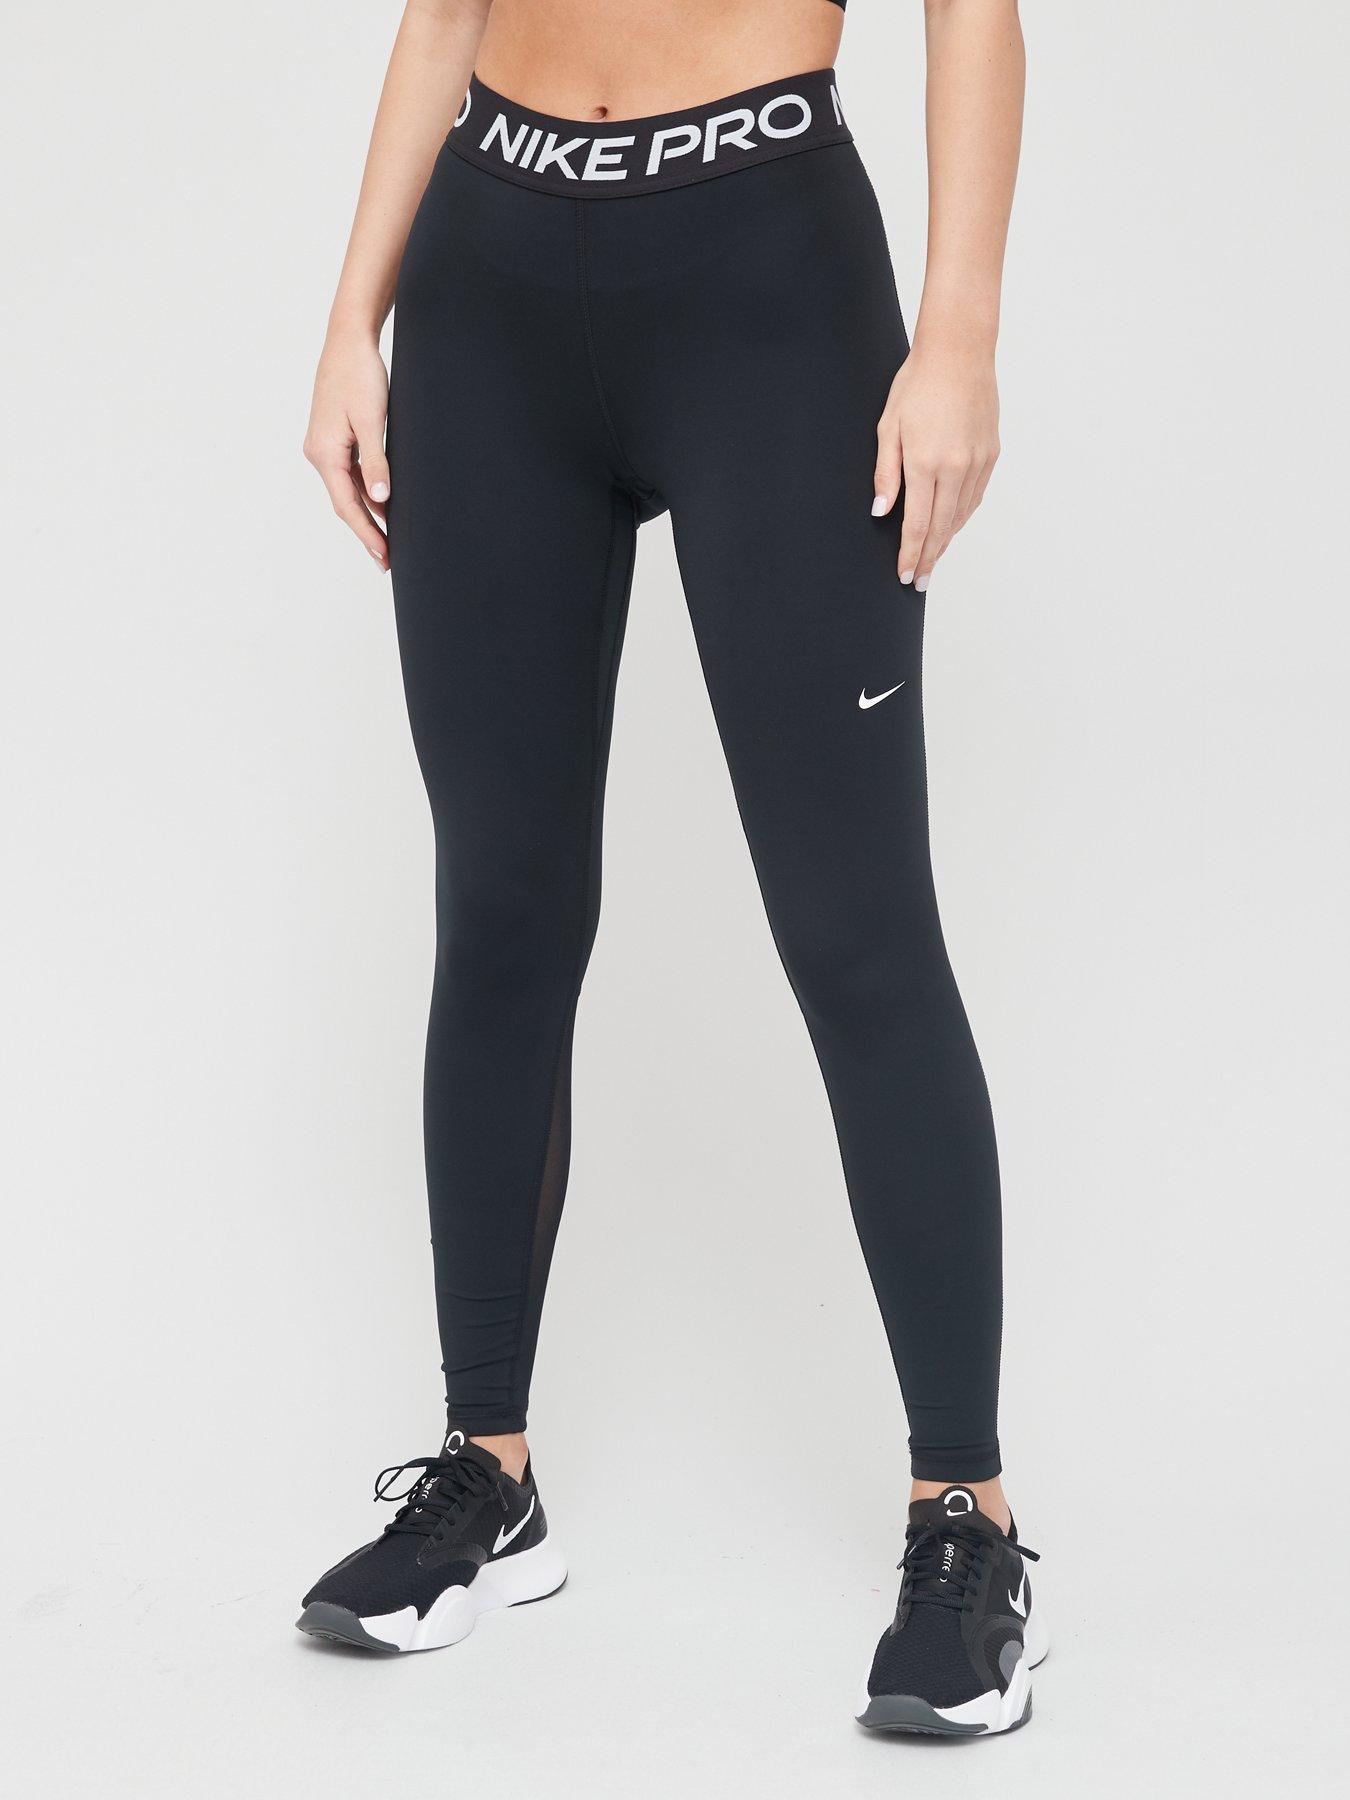 Tights & leggings, Womens sports clothing, Sports & leisure, Nike